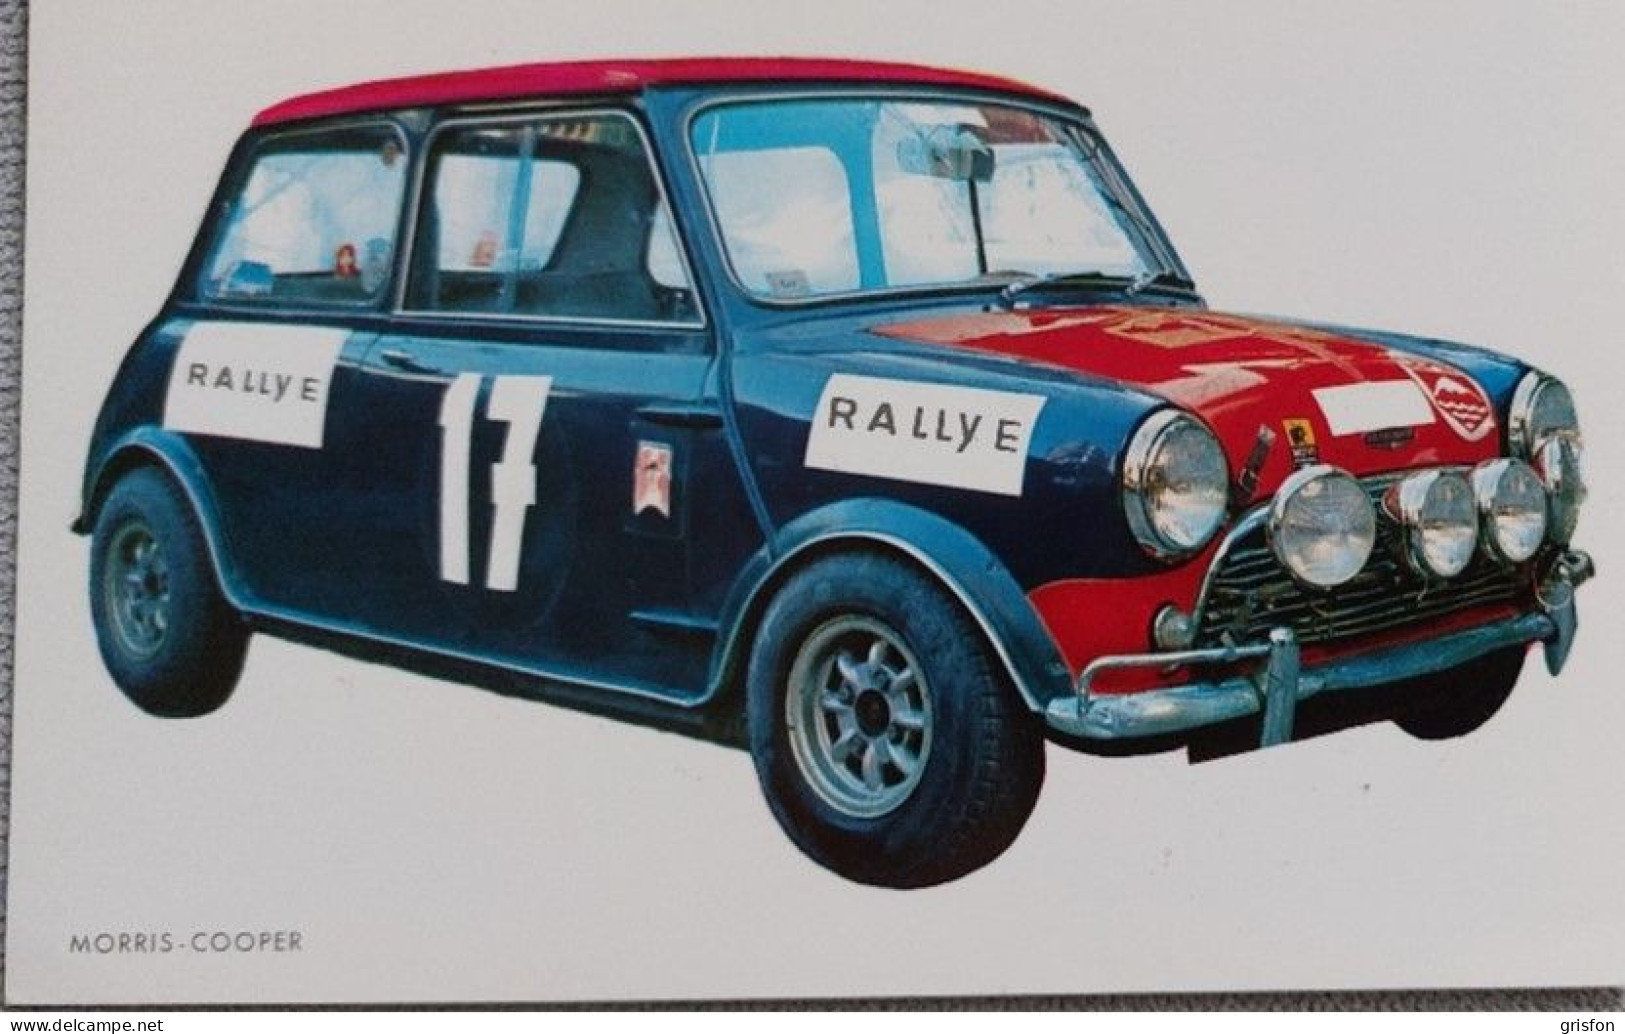 Morris Cooper - Rally Racing